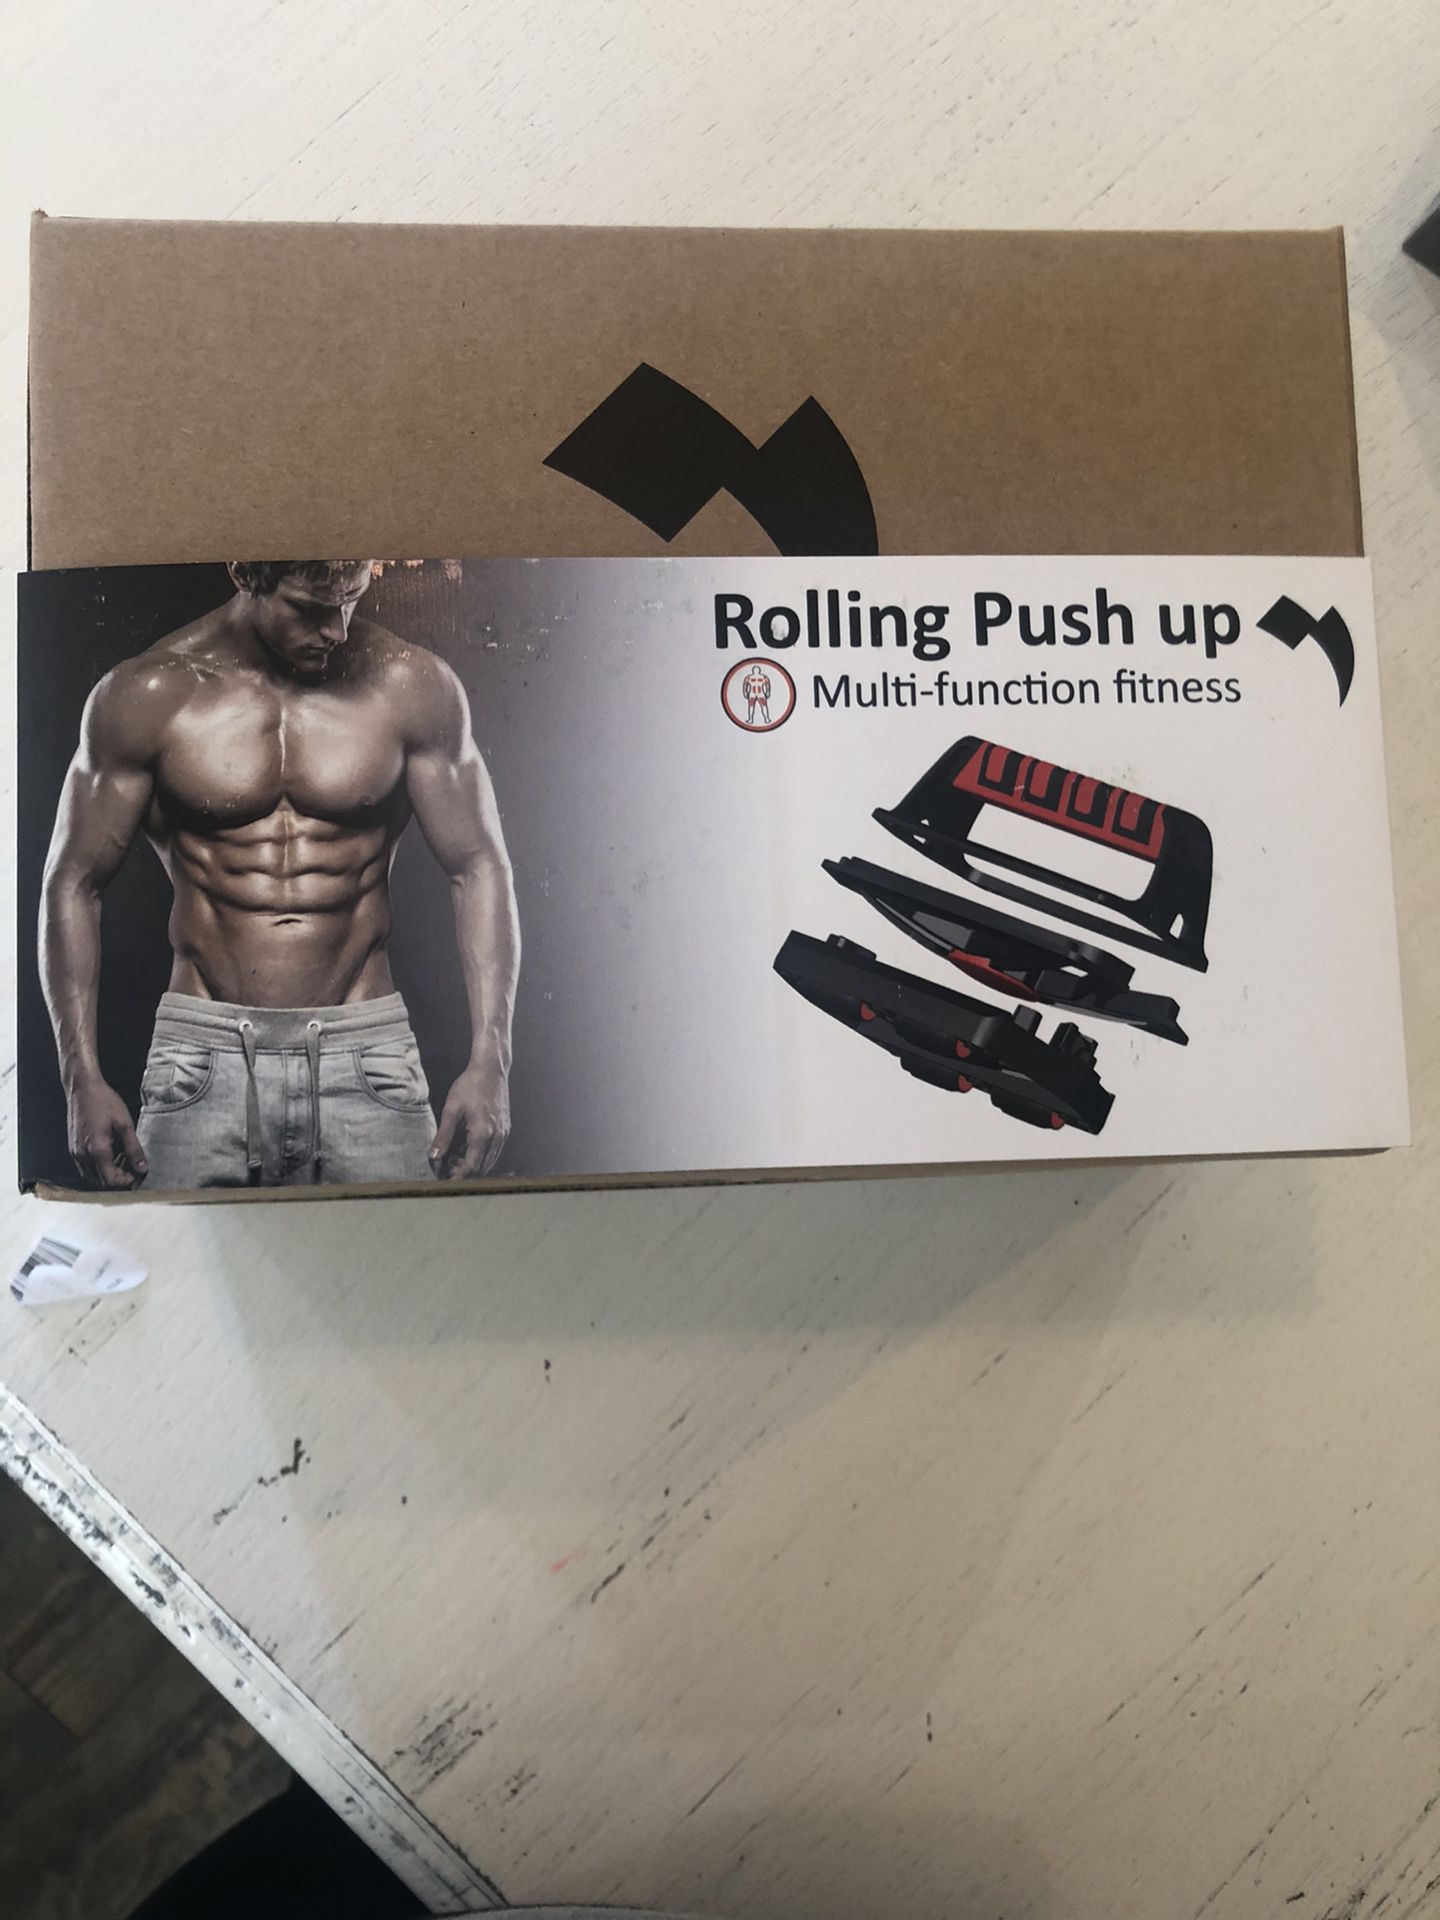 Rolling push up equipment